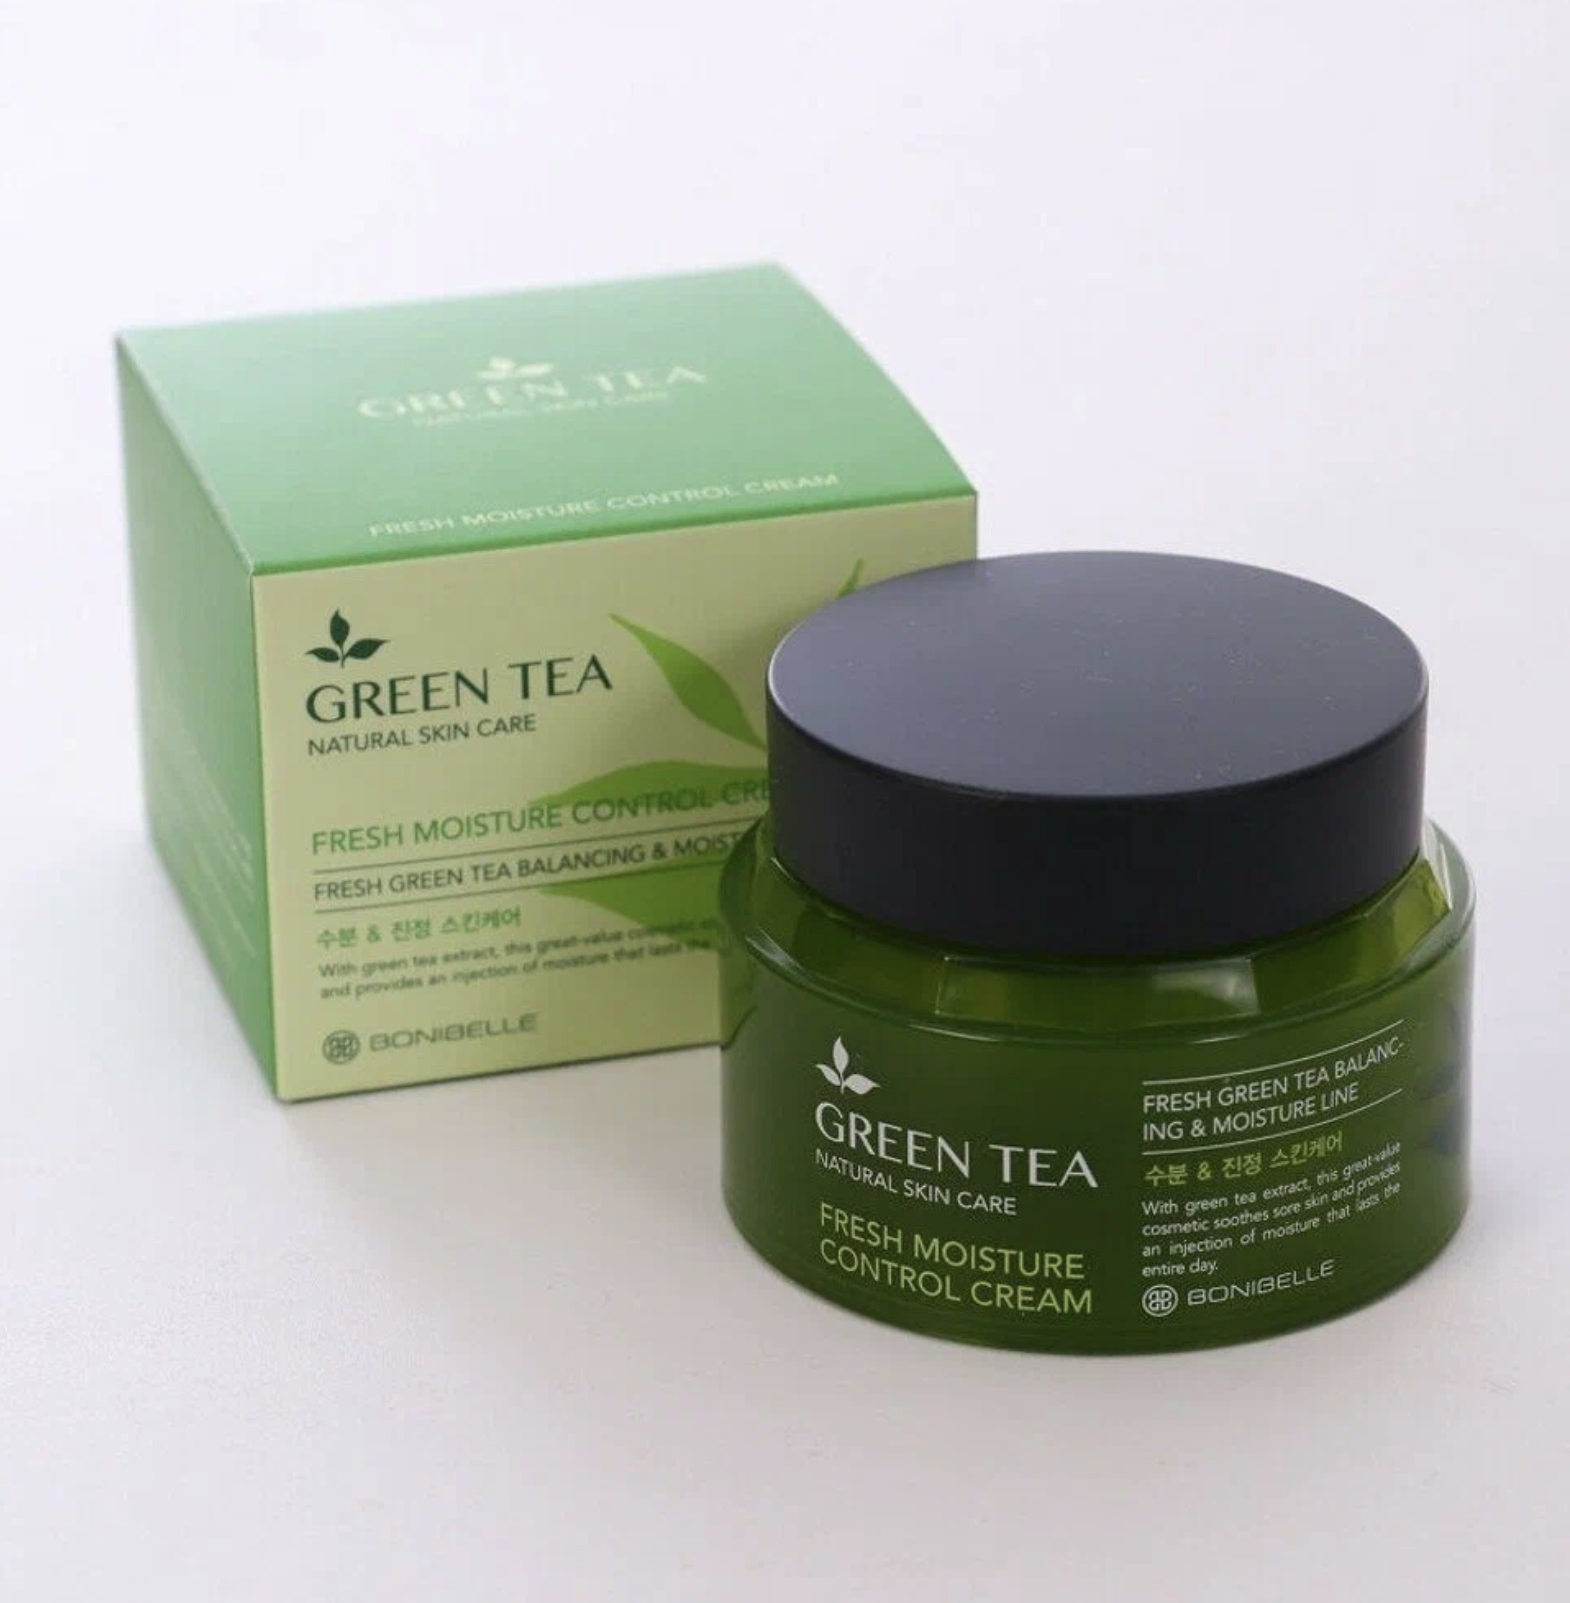   / Bonibelle -    Green Tea Fresh moisture control cream 80 